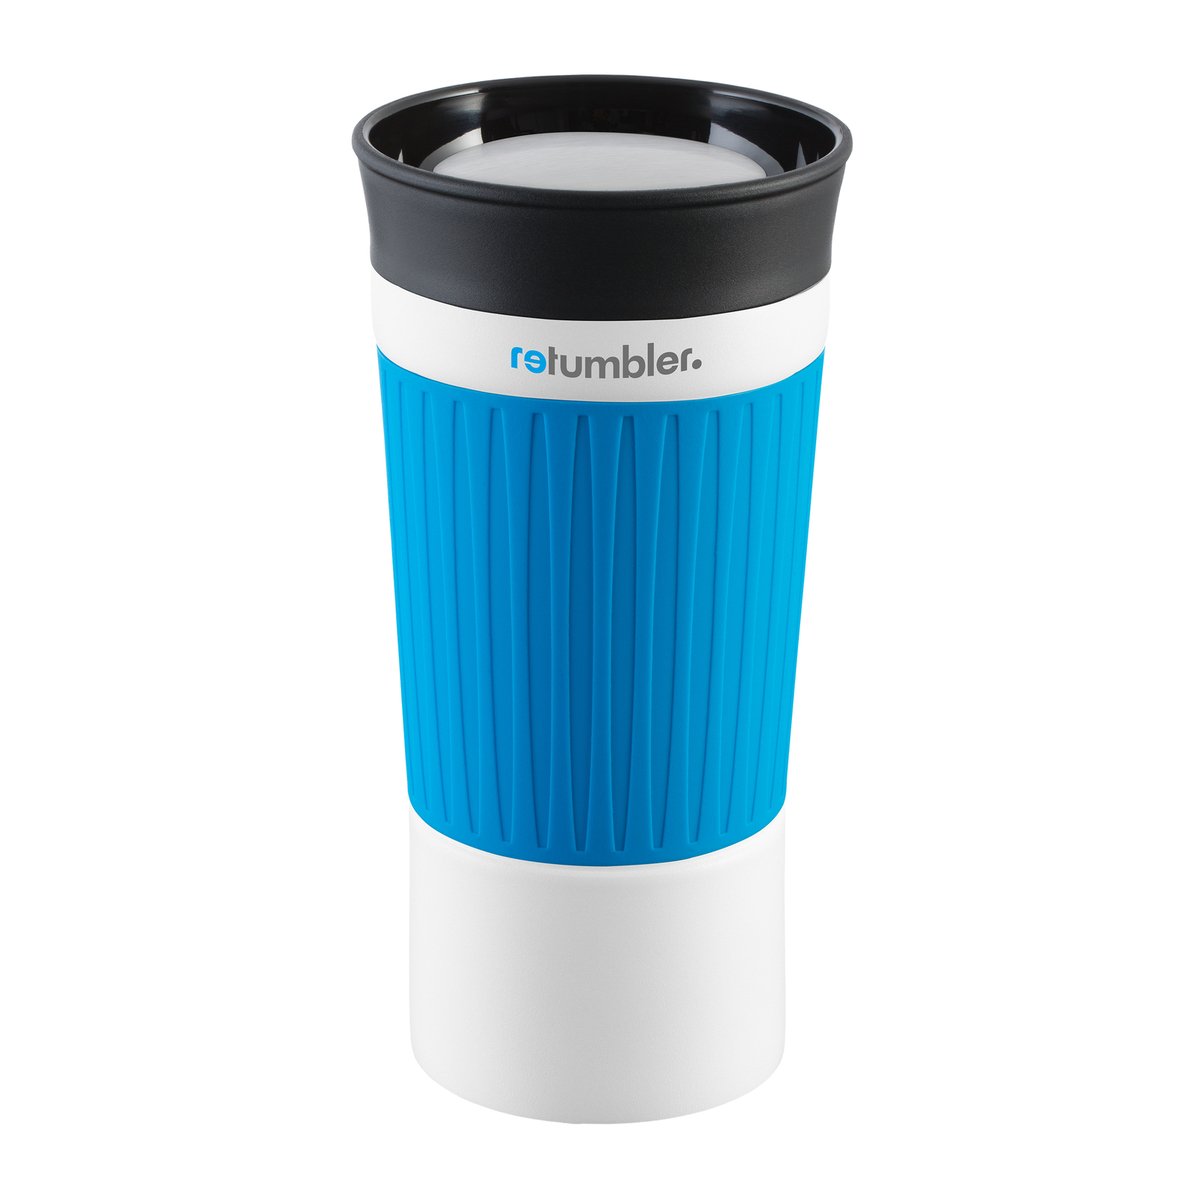 Thermo mug RETUMBLER-myKINGSTON "Retumbler" white/cyan branded sample